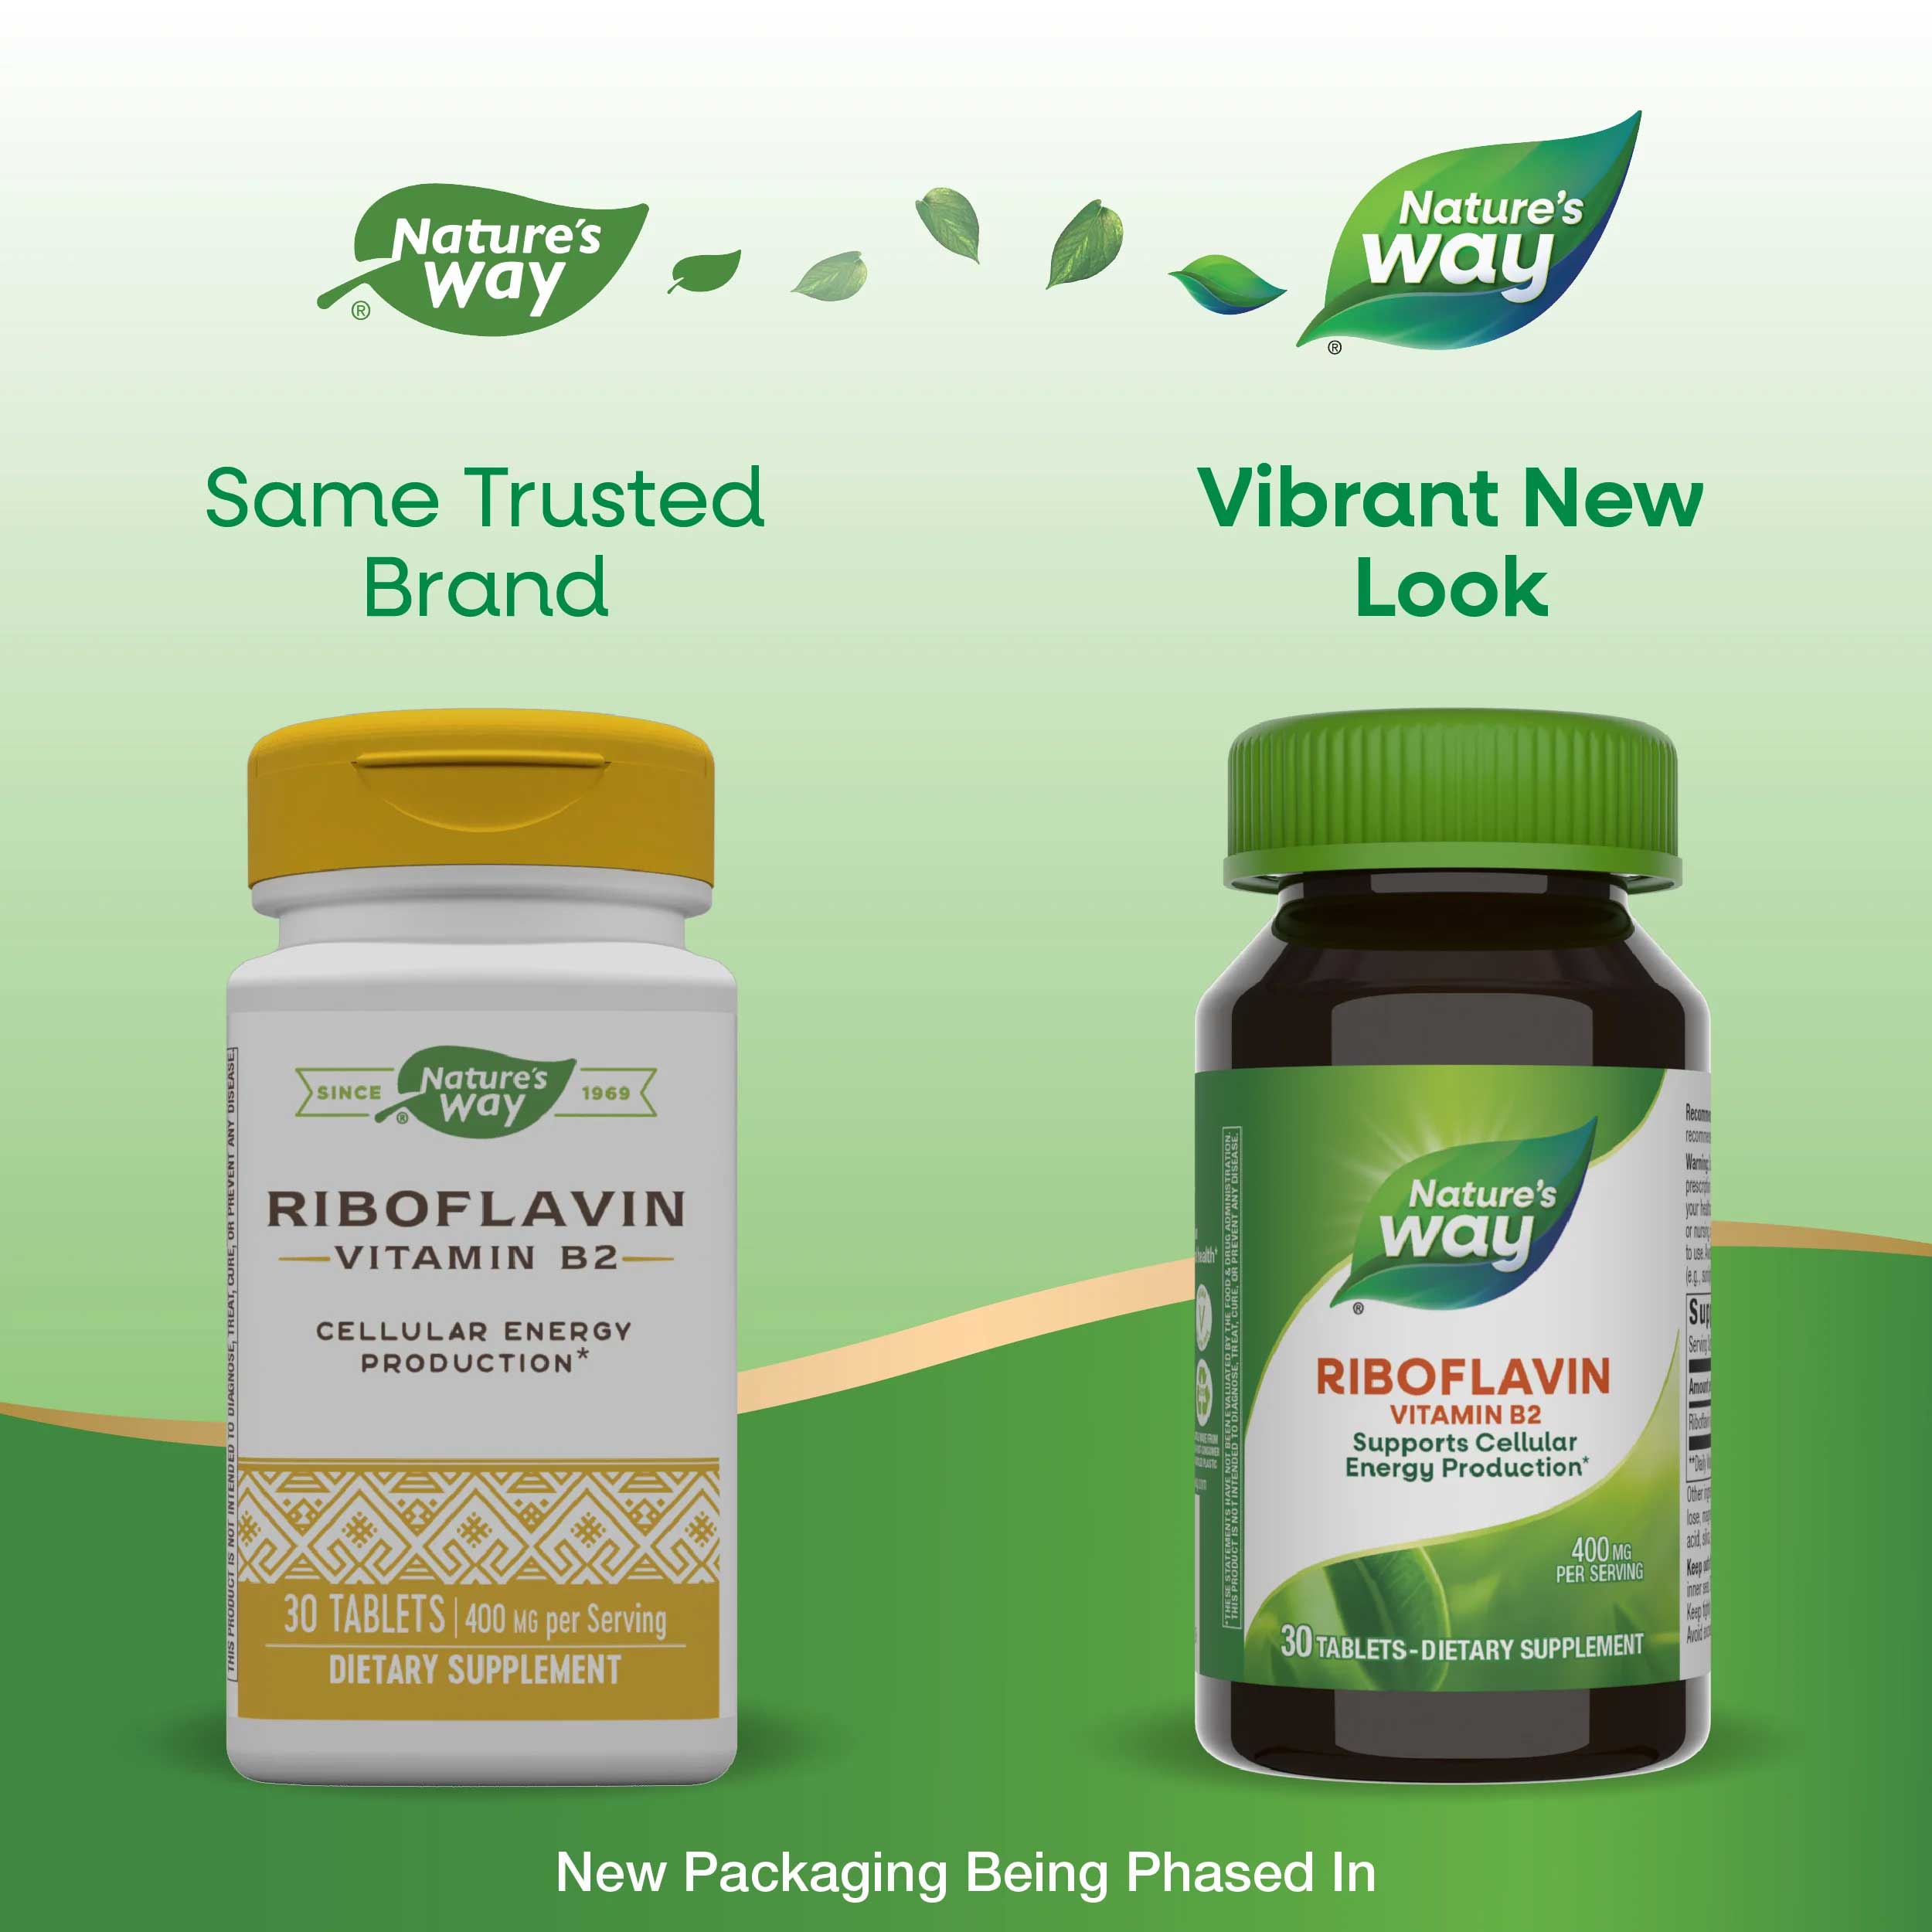 Nature's Way Riboflavin Vitamin B2 New Look